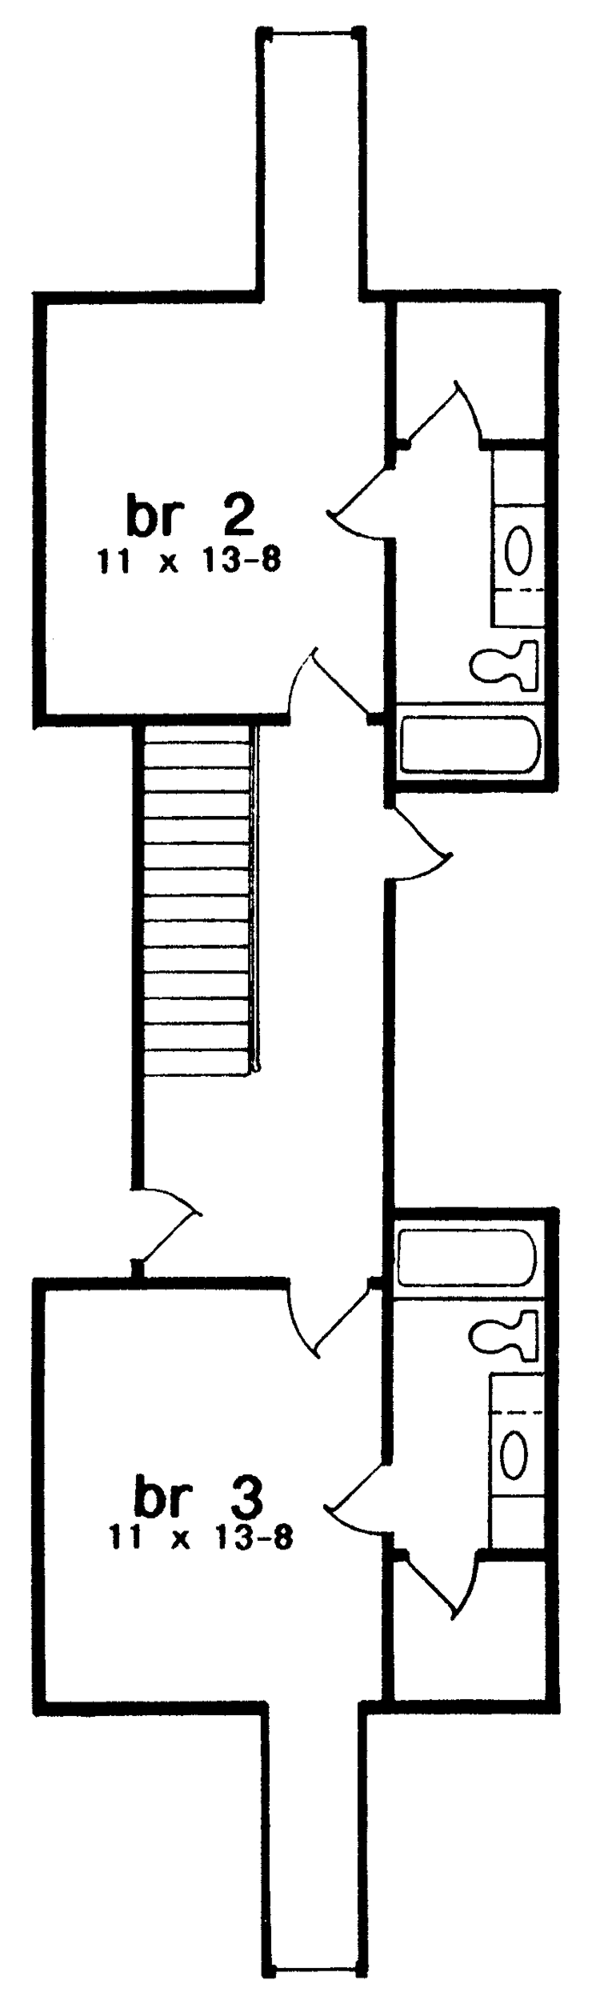 Architectural House Design - Country Floor Plan - Upper Floor Plan #301-133